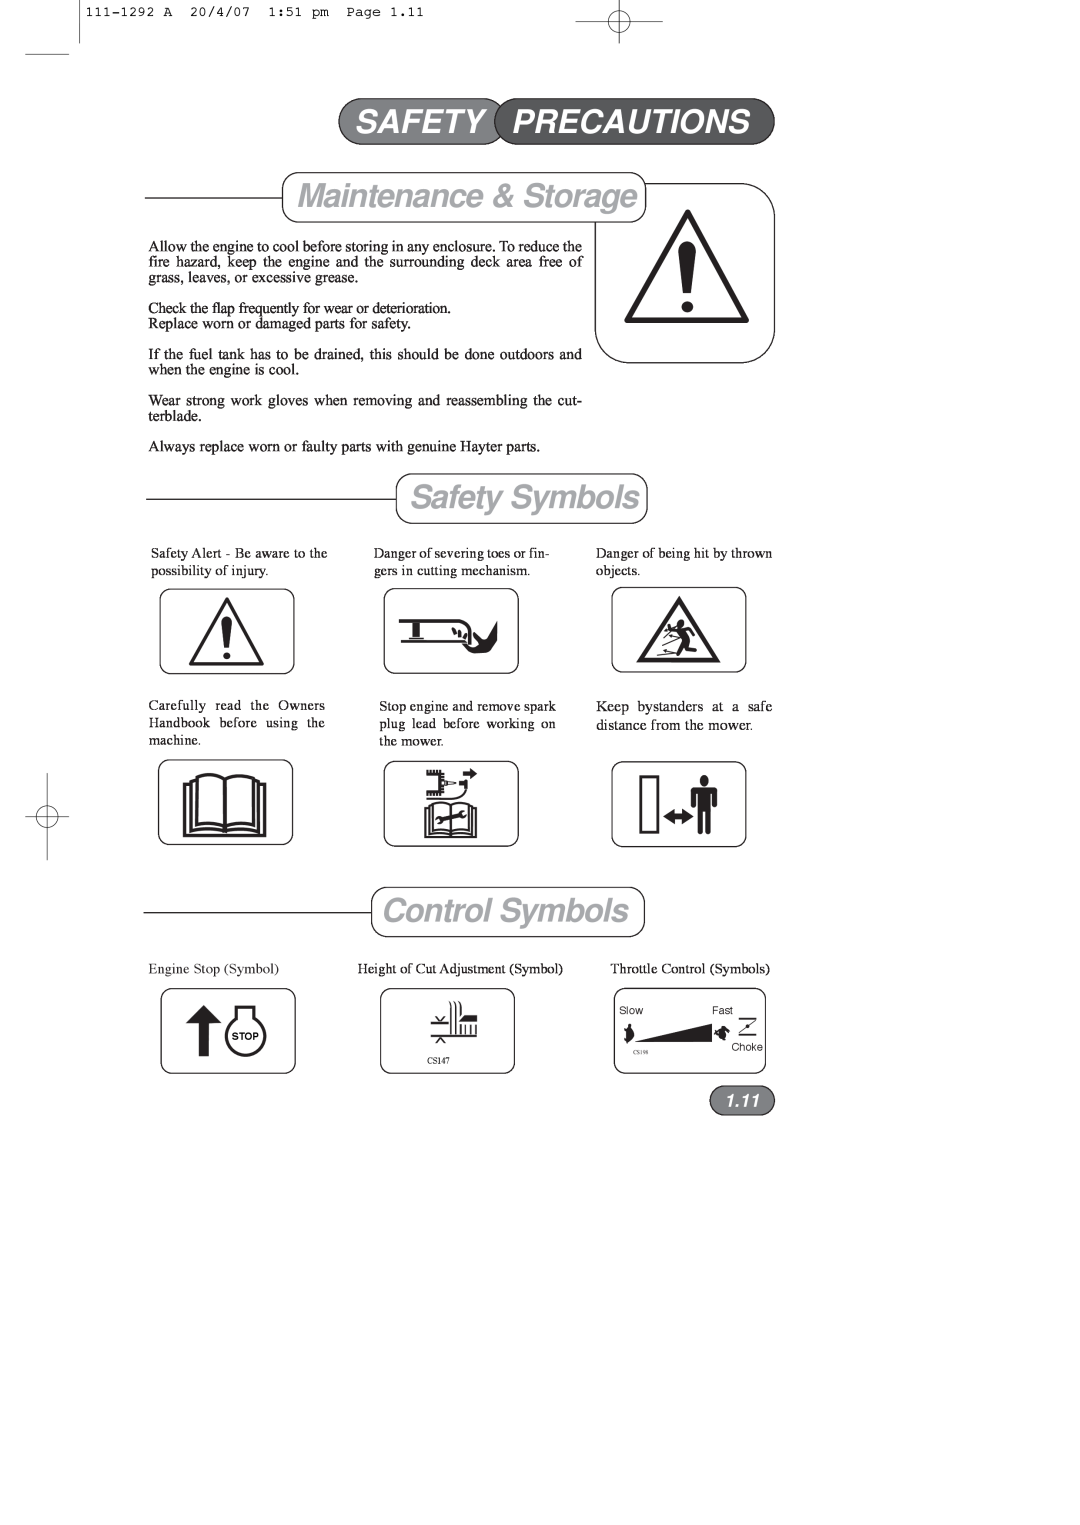 Hayter Mowers 005E manual Safety Symbols, Control Symbols, 1.11, Safety Precautions, Maintenance & Storage 